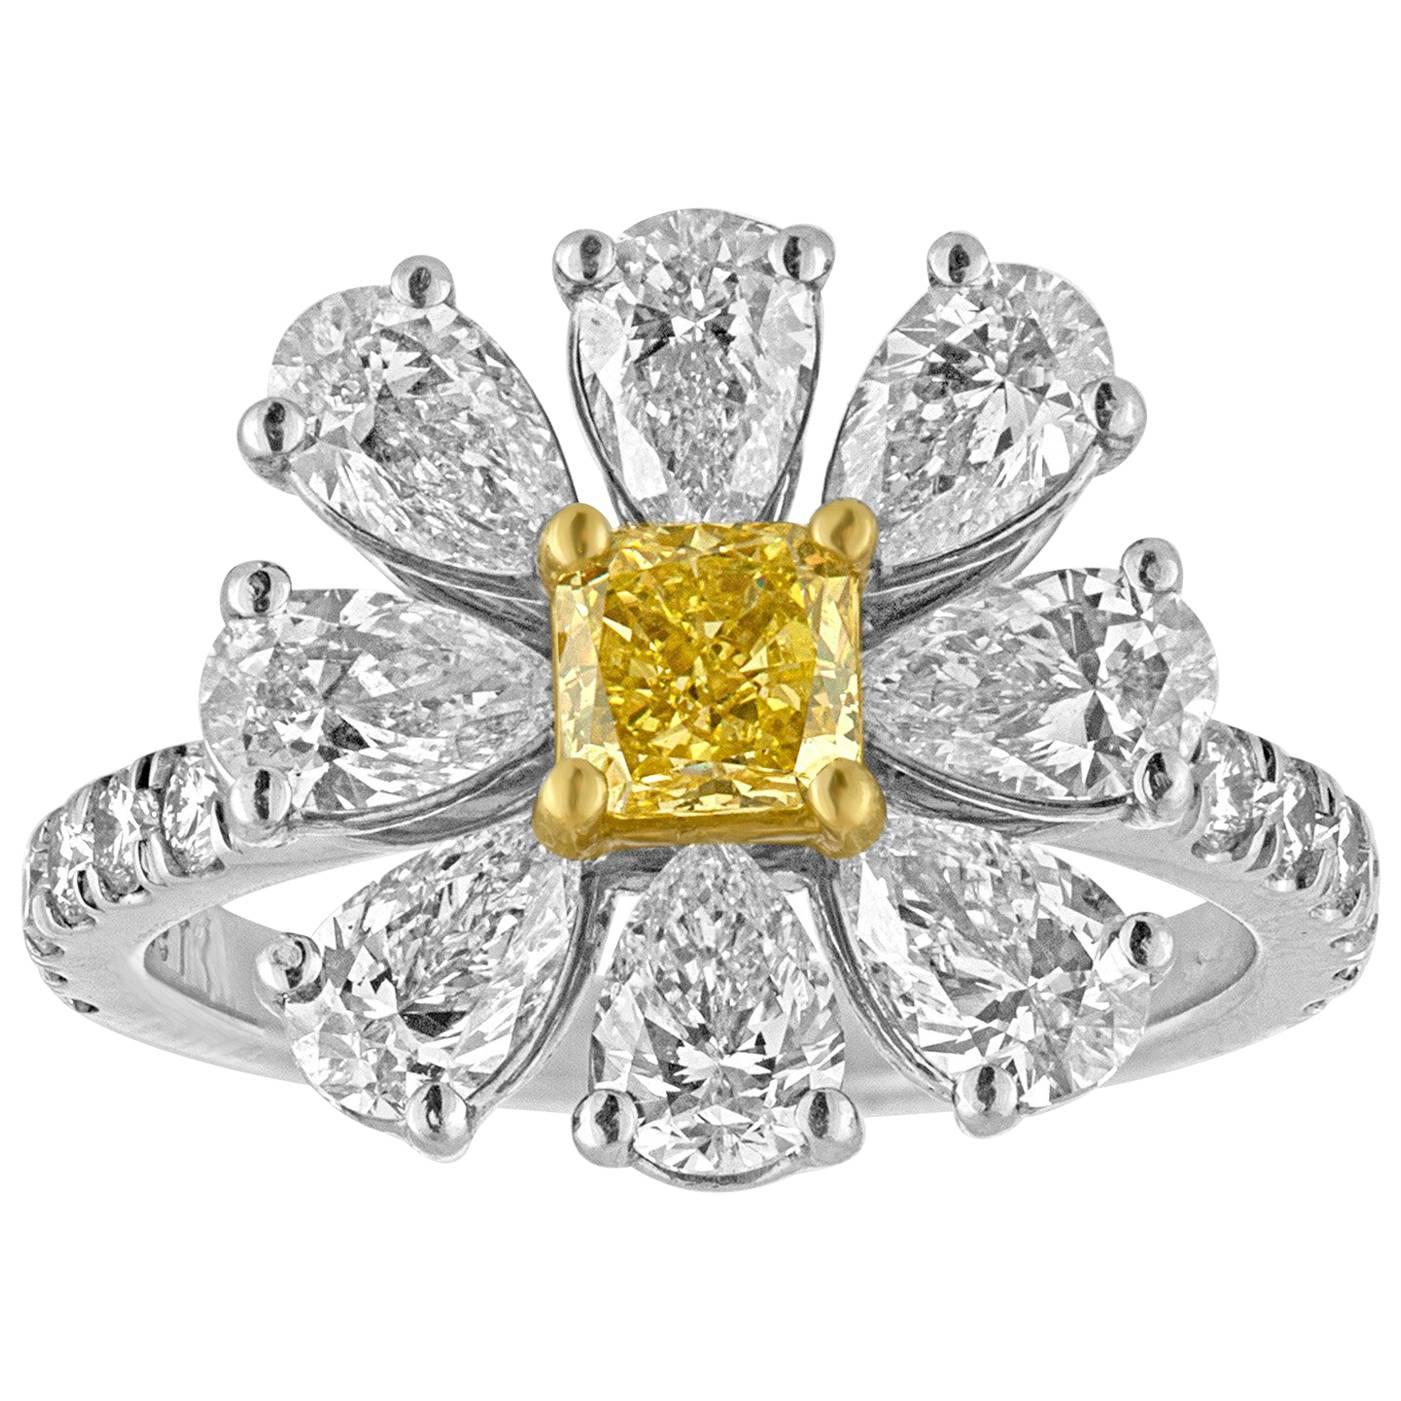 3.11 Carat Fancy Intense Yellow and White Diamonds Platinum Daisy Flower Ring